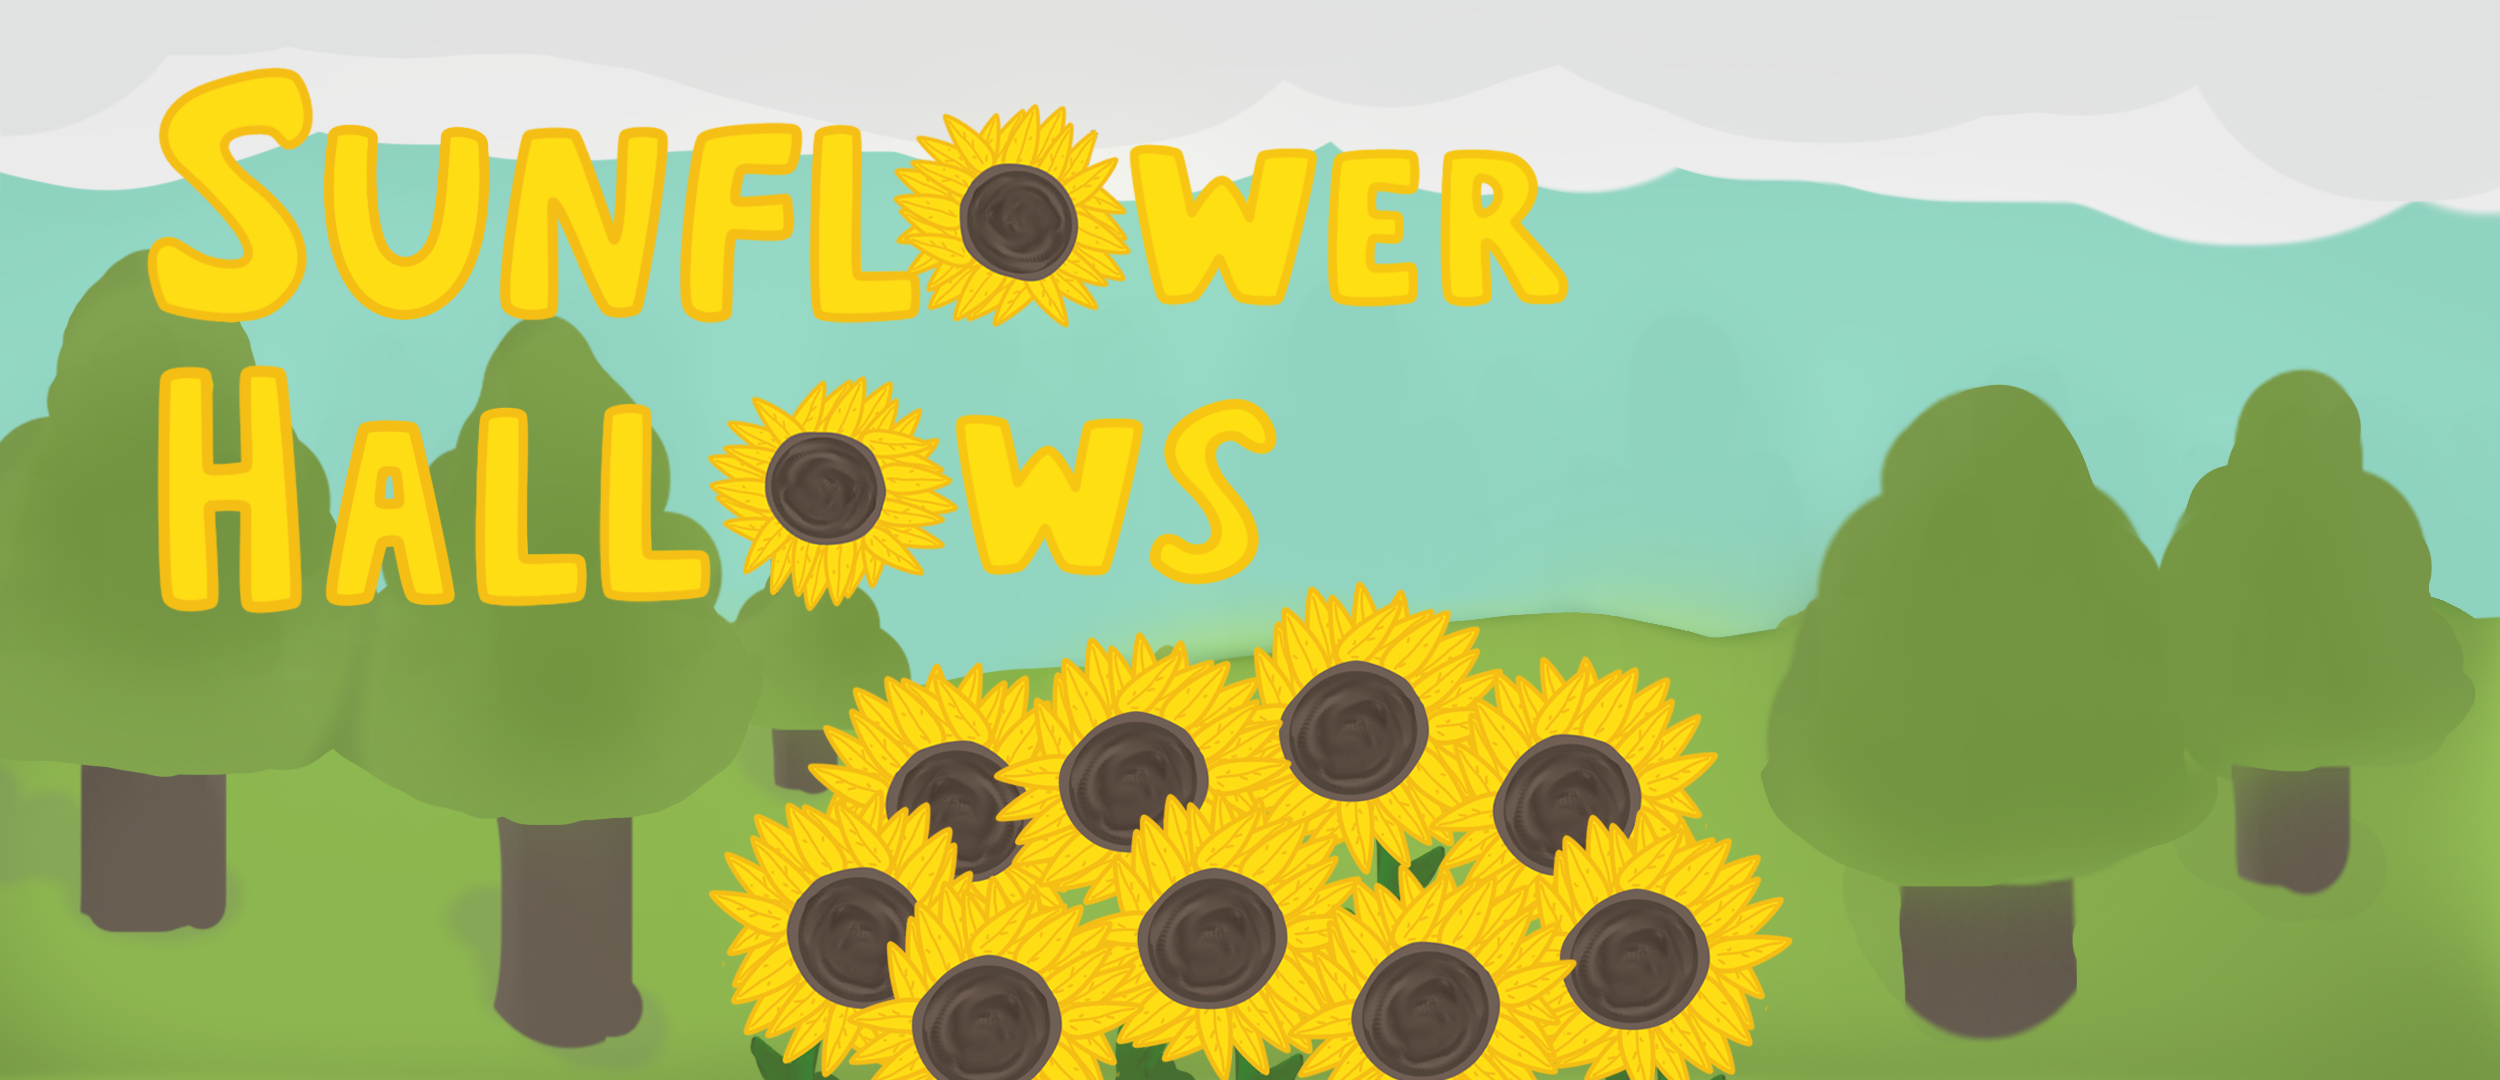 Sunflower Hallows